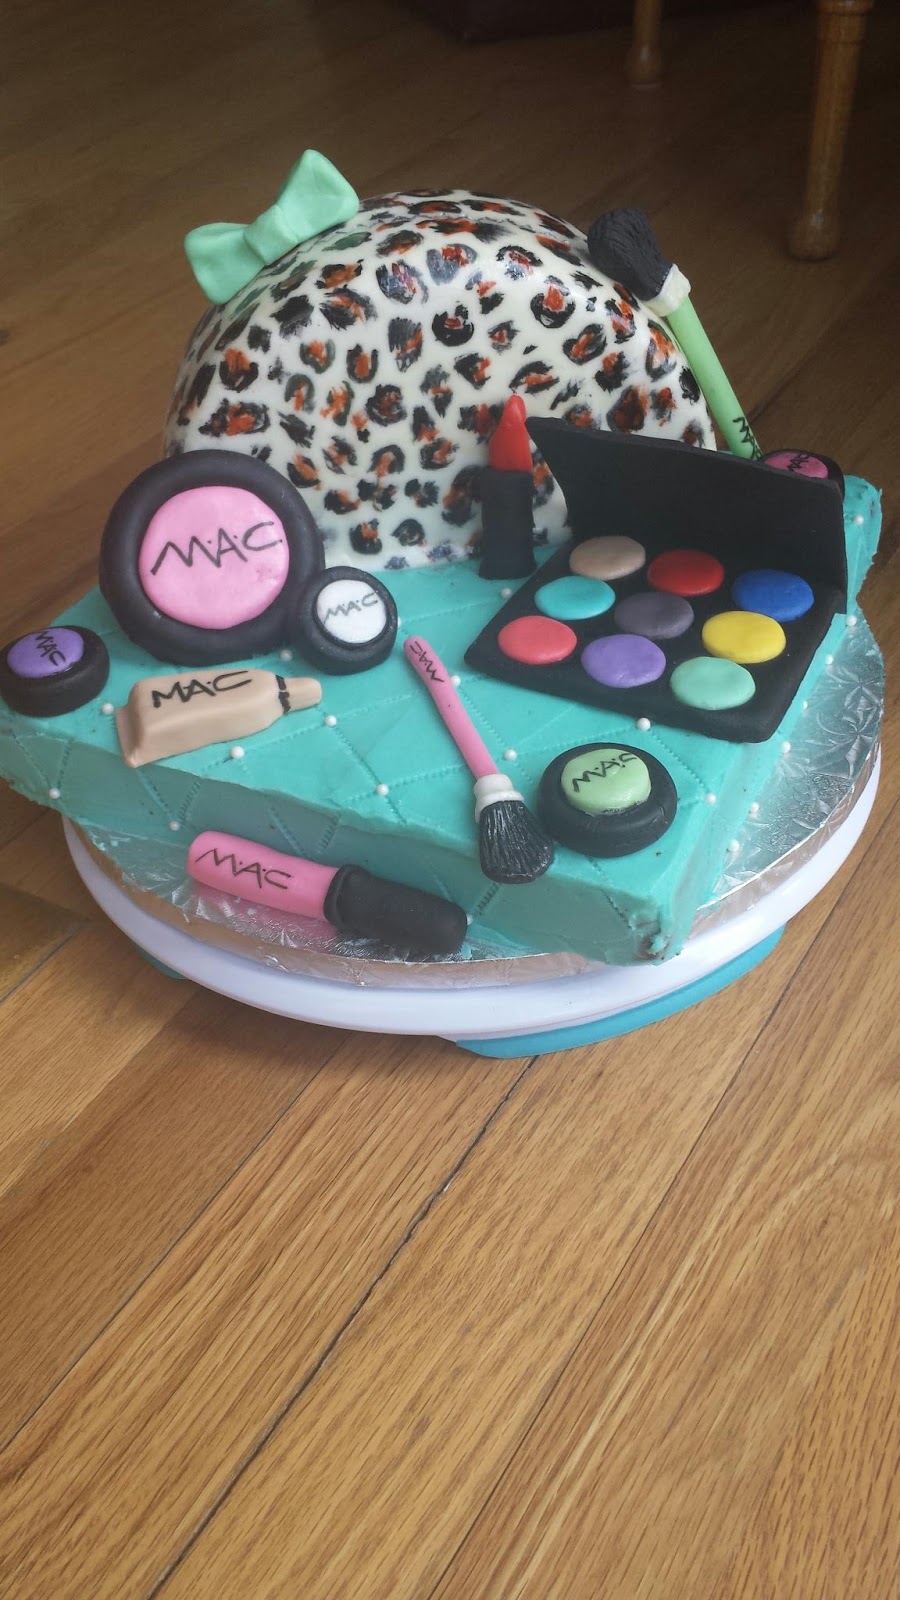 Happy Birthday Cake with Mac Makeup